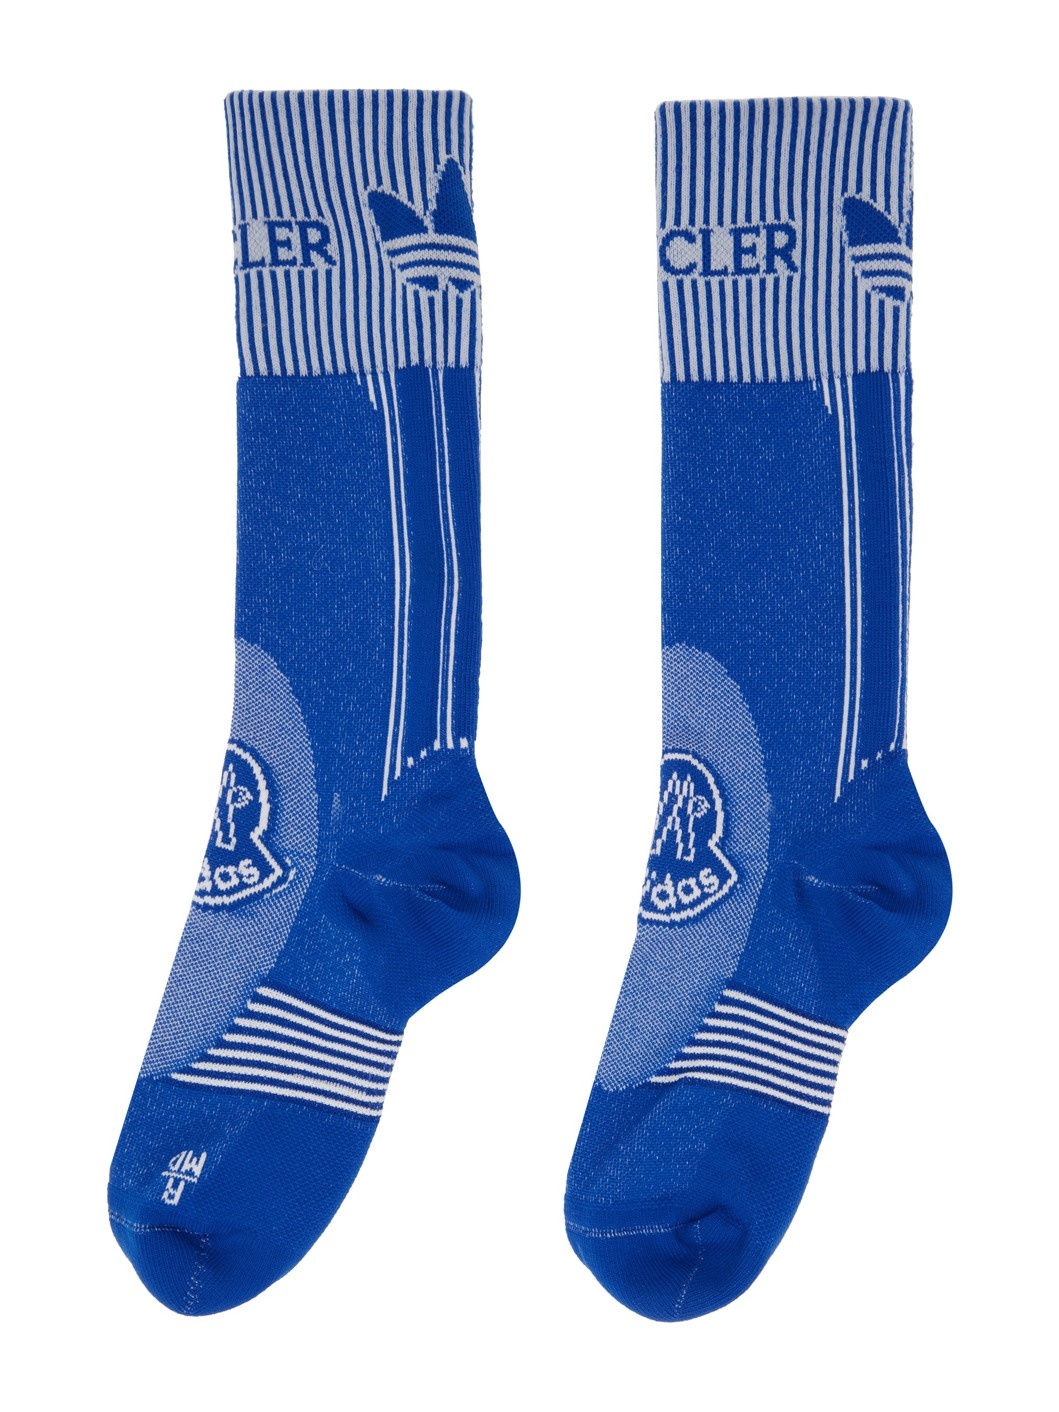 Moncler x adidas Originals Blue Socks - 2